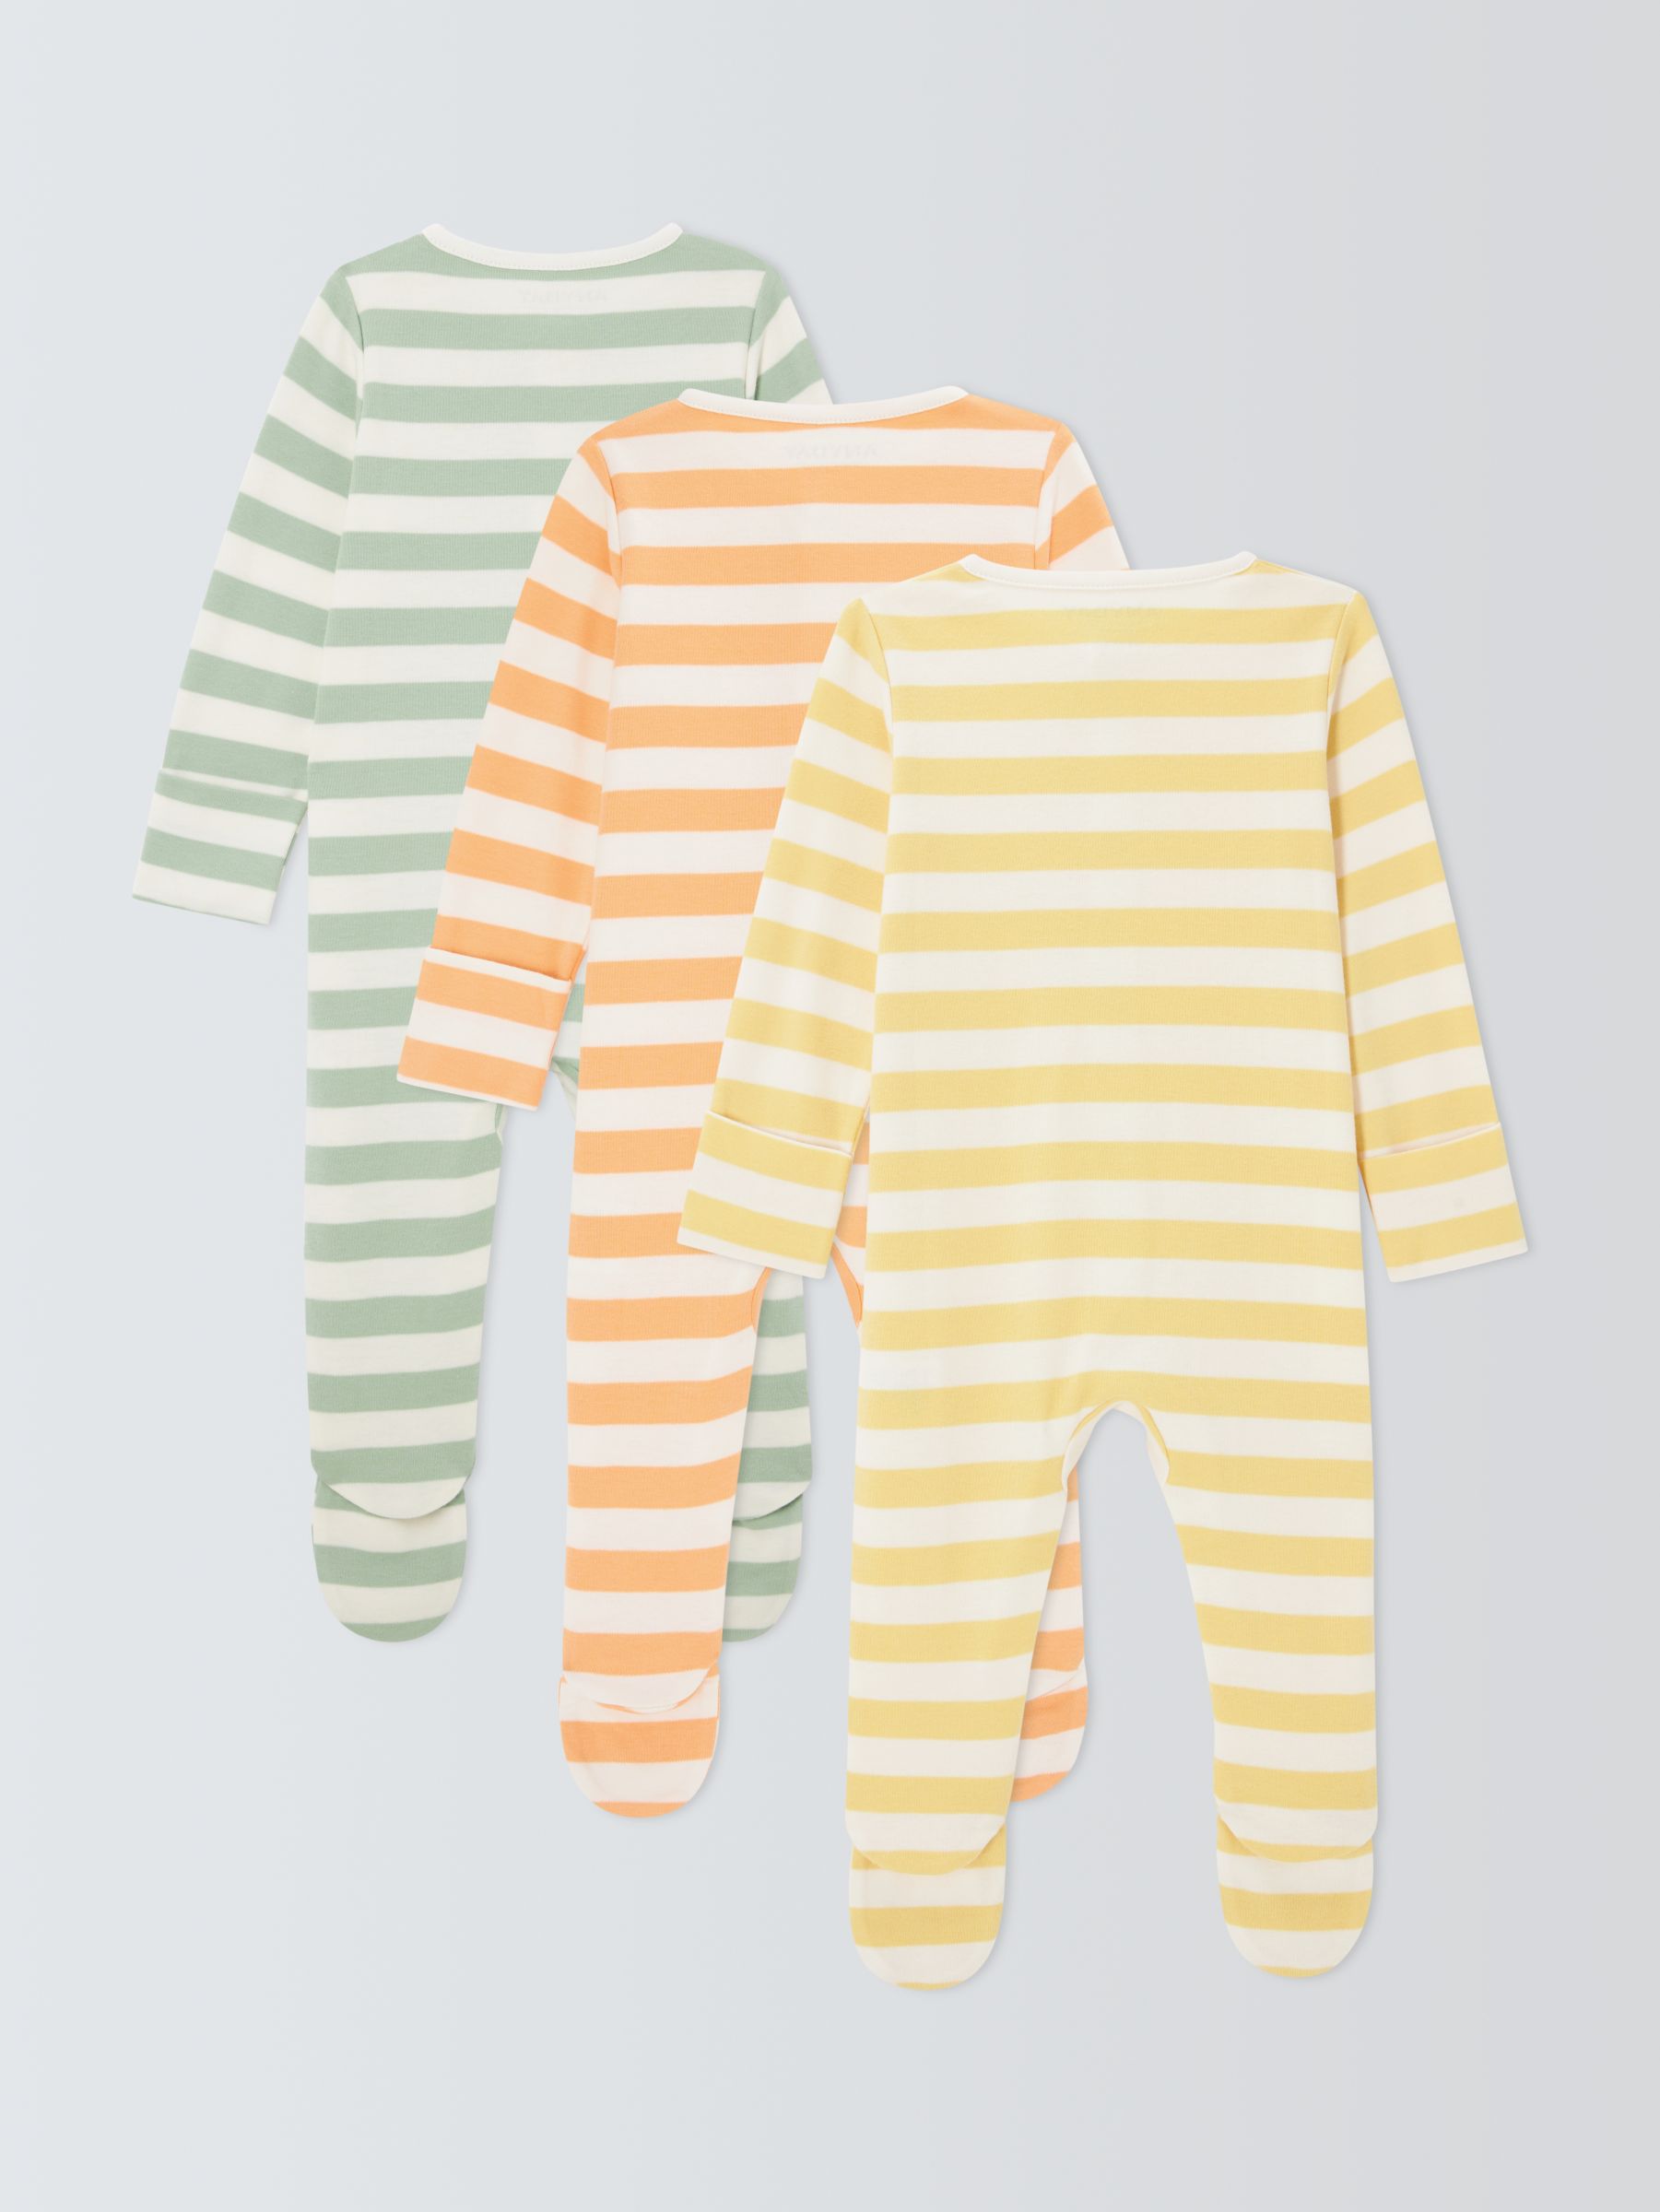 Buy John Lewis ANYDAY Baby Stripe Sleepsuit, Pack of 3, Multi Online at johnlewis.com